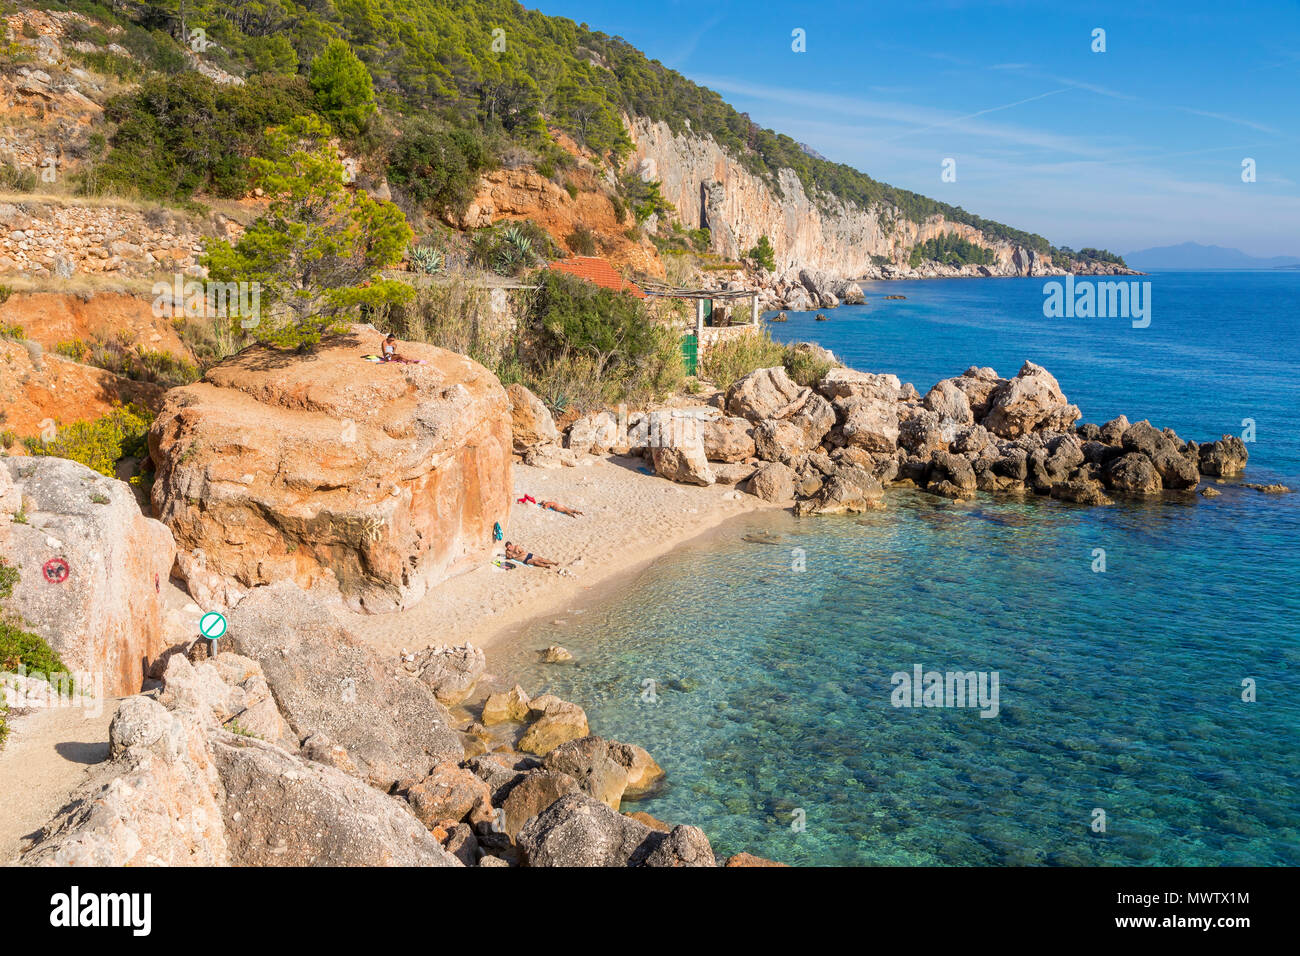 Skala Beach vicino a Sveta Nedjelja sull'isola di Hvar, Croazia, Europa Foto Stock